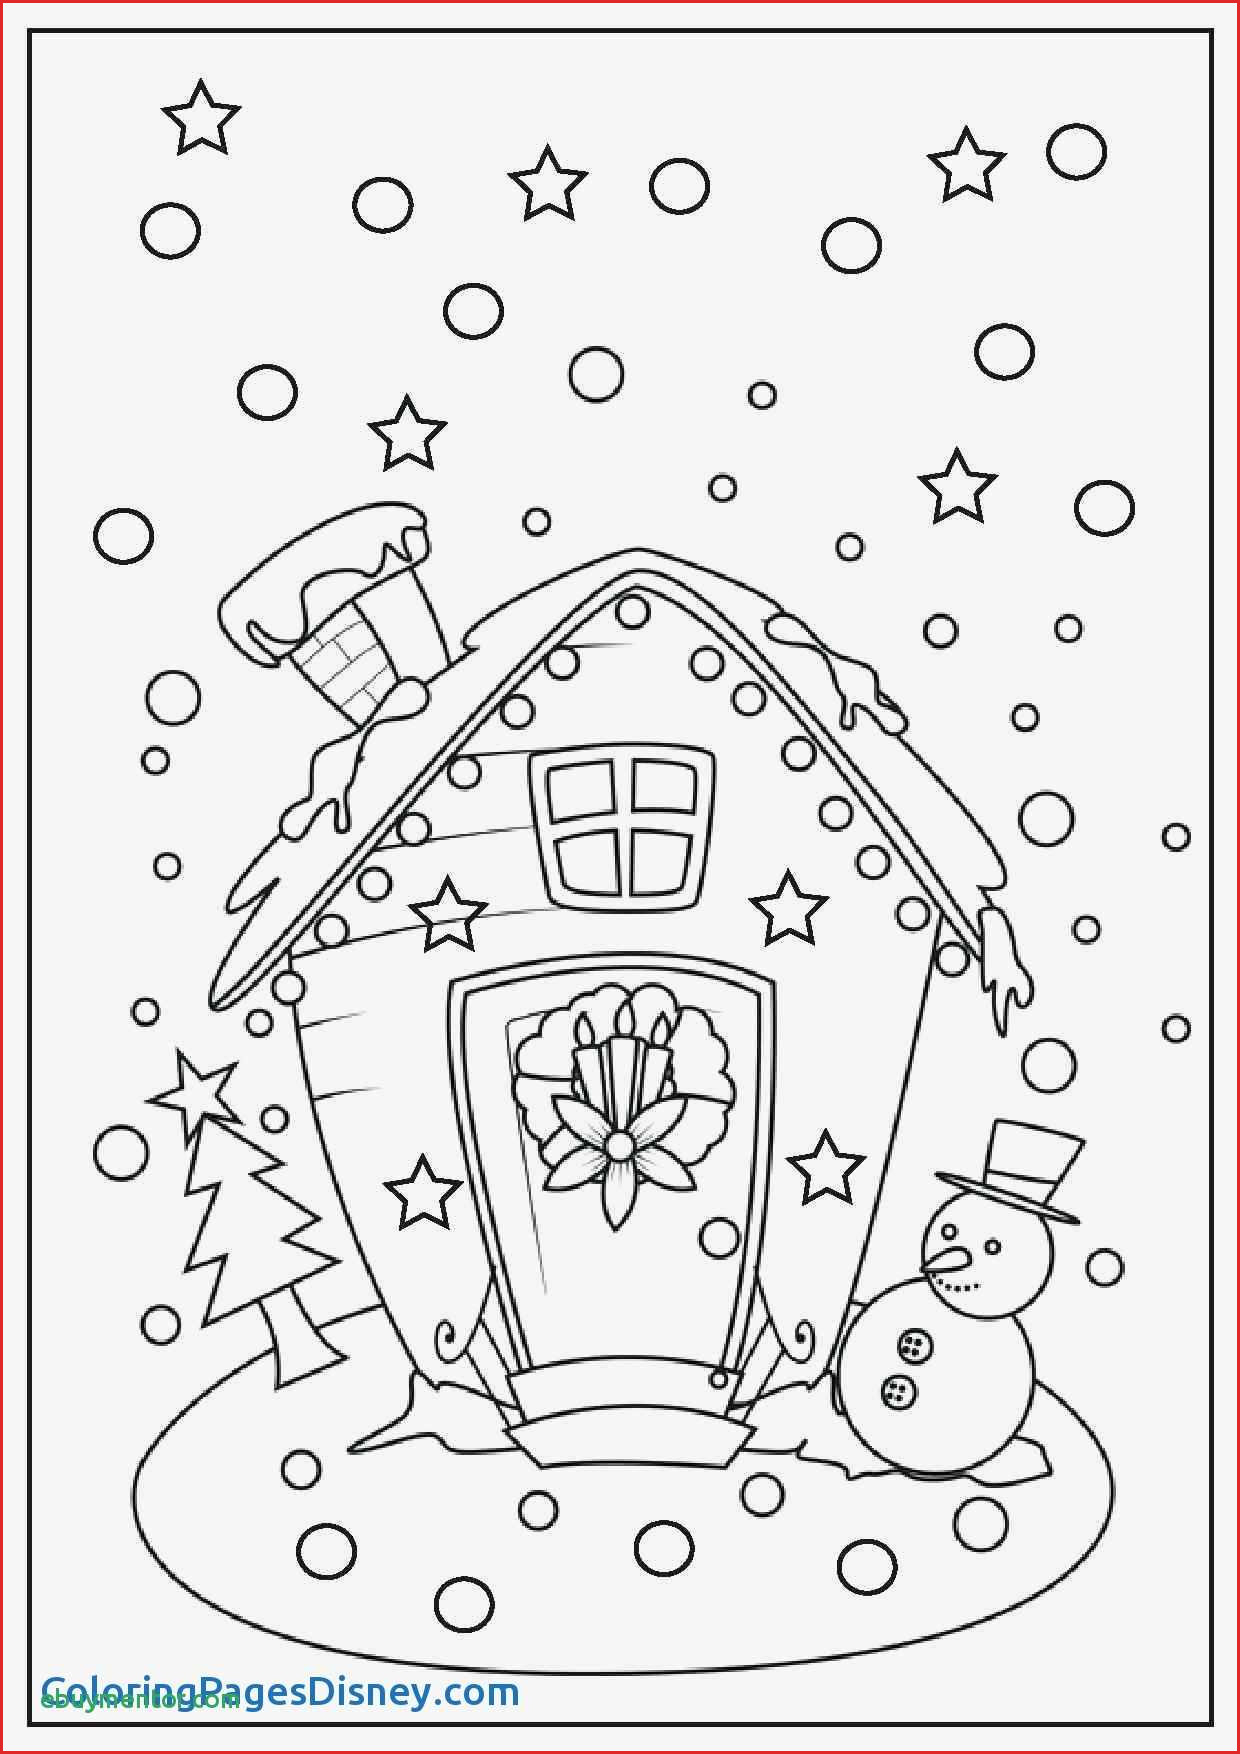 Free Christmas Printable Coloring Pages Toddler Coloring Pages 15700 Free Christmas Coloring Pages For Kids